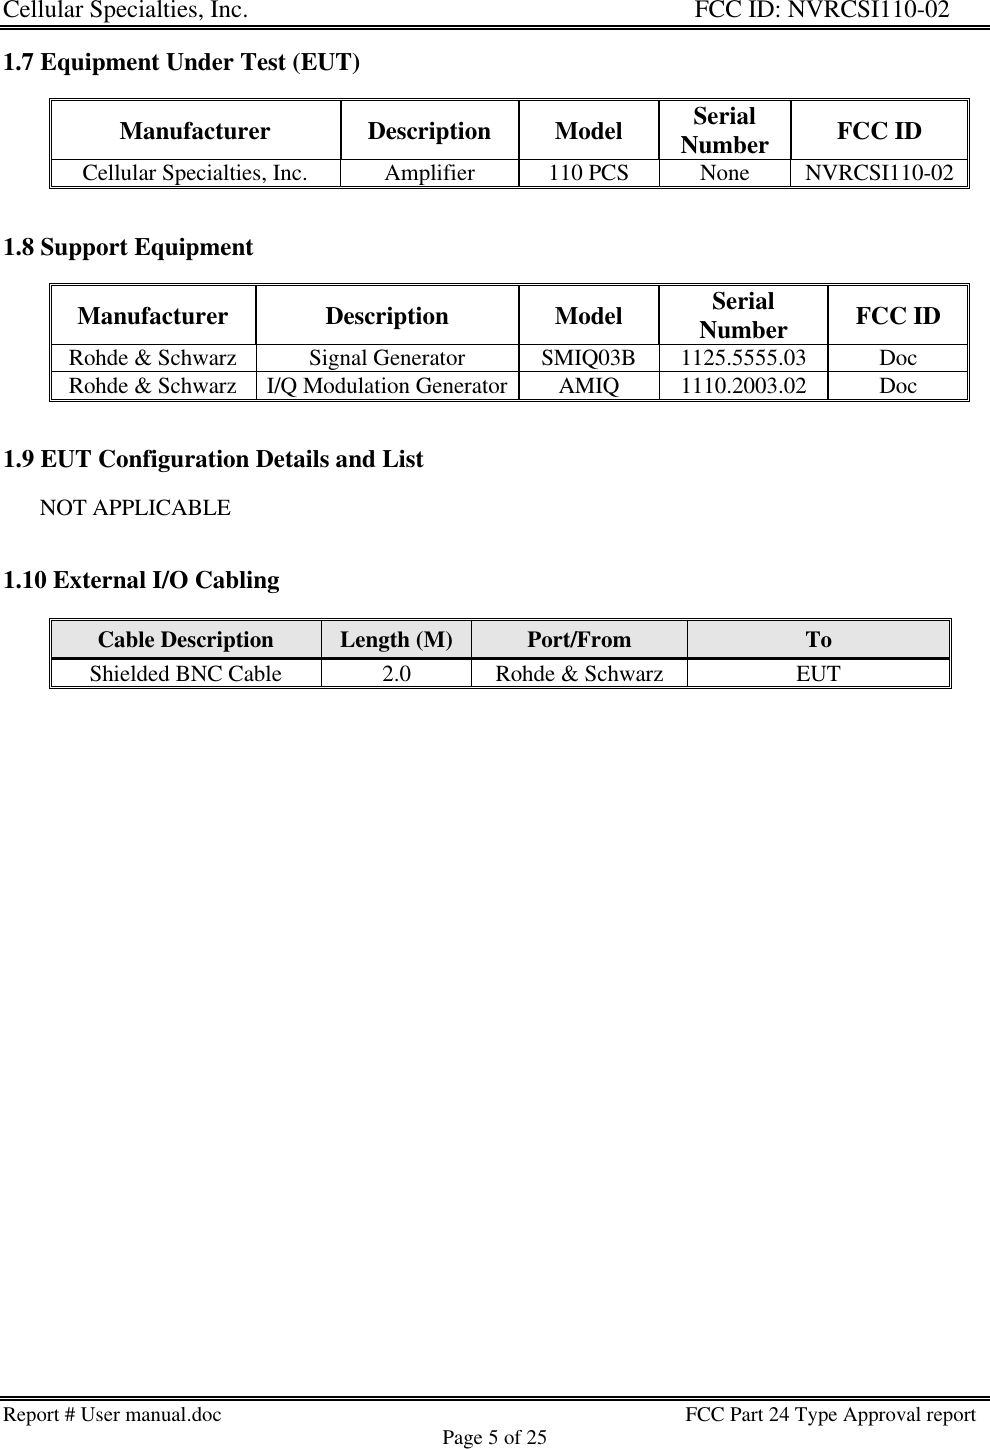 Cellular Specialties, Inc. FCC ID: NVRCSI110-02Report # User manual.doc                                                                                         FCC Part 24 Type Approval reportPage 5 of 251.7 Equipment Under Test (EUT)Manufacturer Description Model SerialNumber FCC IDCellular Specialties, Inc. Amplifier 110 PCS None NVRCSI110-021.8 Support EquipmentManufacturer Description Model SerialNumber FCC IDRohde &amp; Schwarz Signal Generator SMIQ03B 1125.5555.03 DocRohde &amp; Schwarz I/Q Modulation Generator AMIQ 1110.2003.02 Doc1.9 EUT Configuration Details and List       NOT APPLICABLE1.10 External I/O CablingCable Description Length (M) Port/From ToShielded BNC Cable 2.0 Rohde &amp; Schwarz EUT